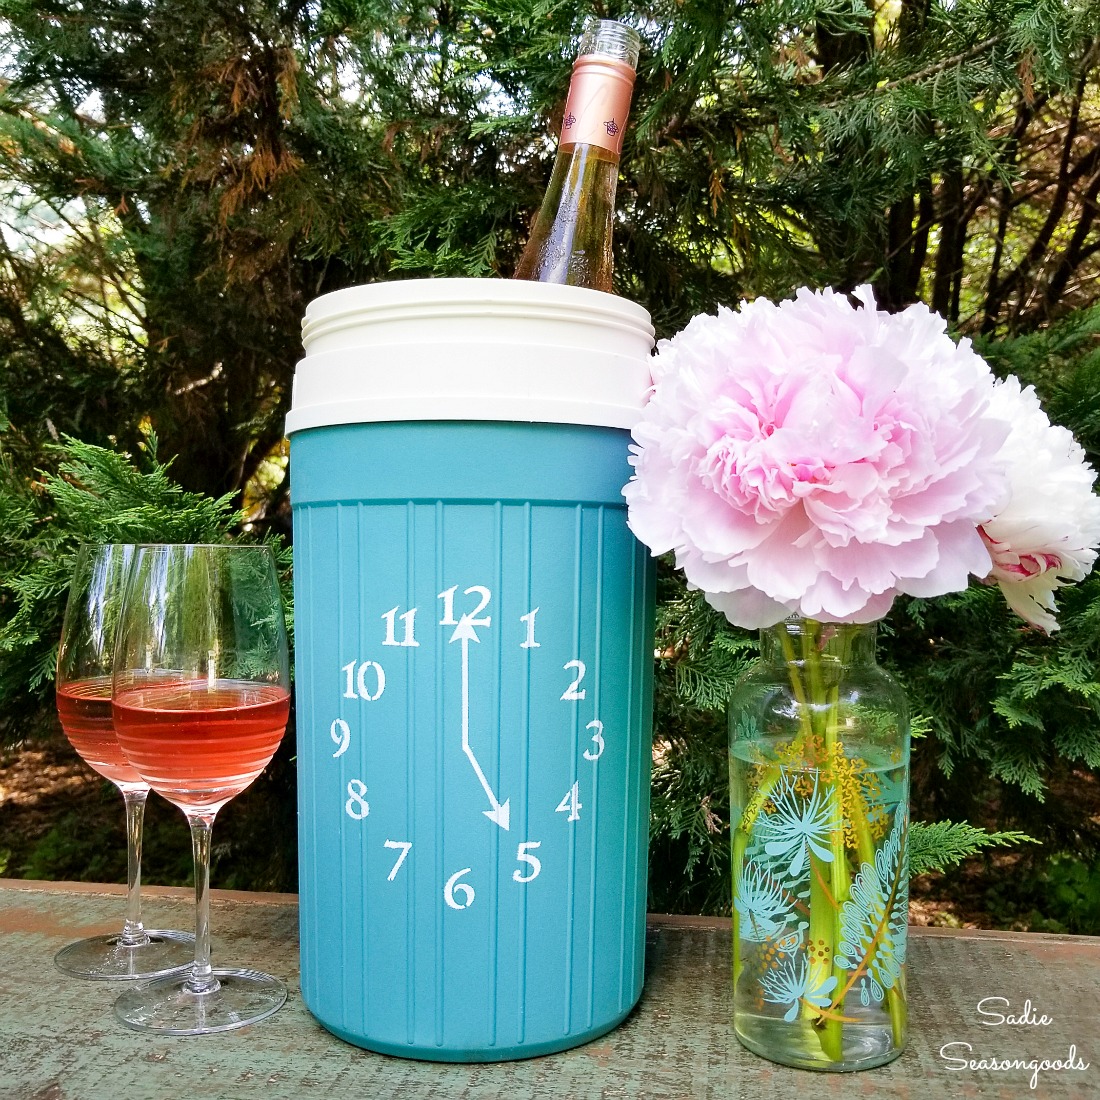 https://www.sadieseasongoods.com/wp-content/uploads/2018/07/Wine-bottle-cooler-for-a-patio-happy-hour-from-an-Igloo-beverage-cooler.jpg